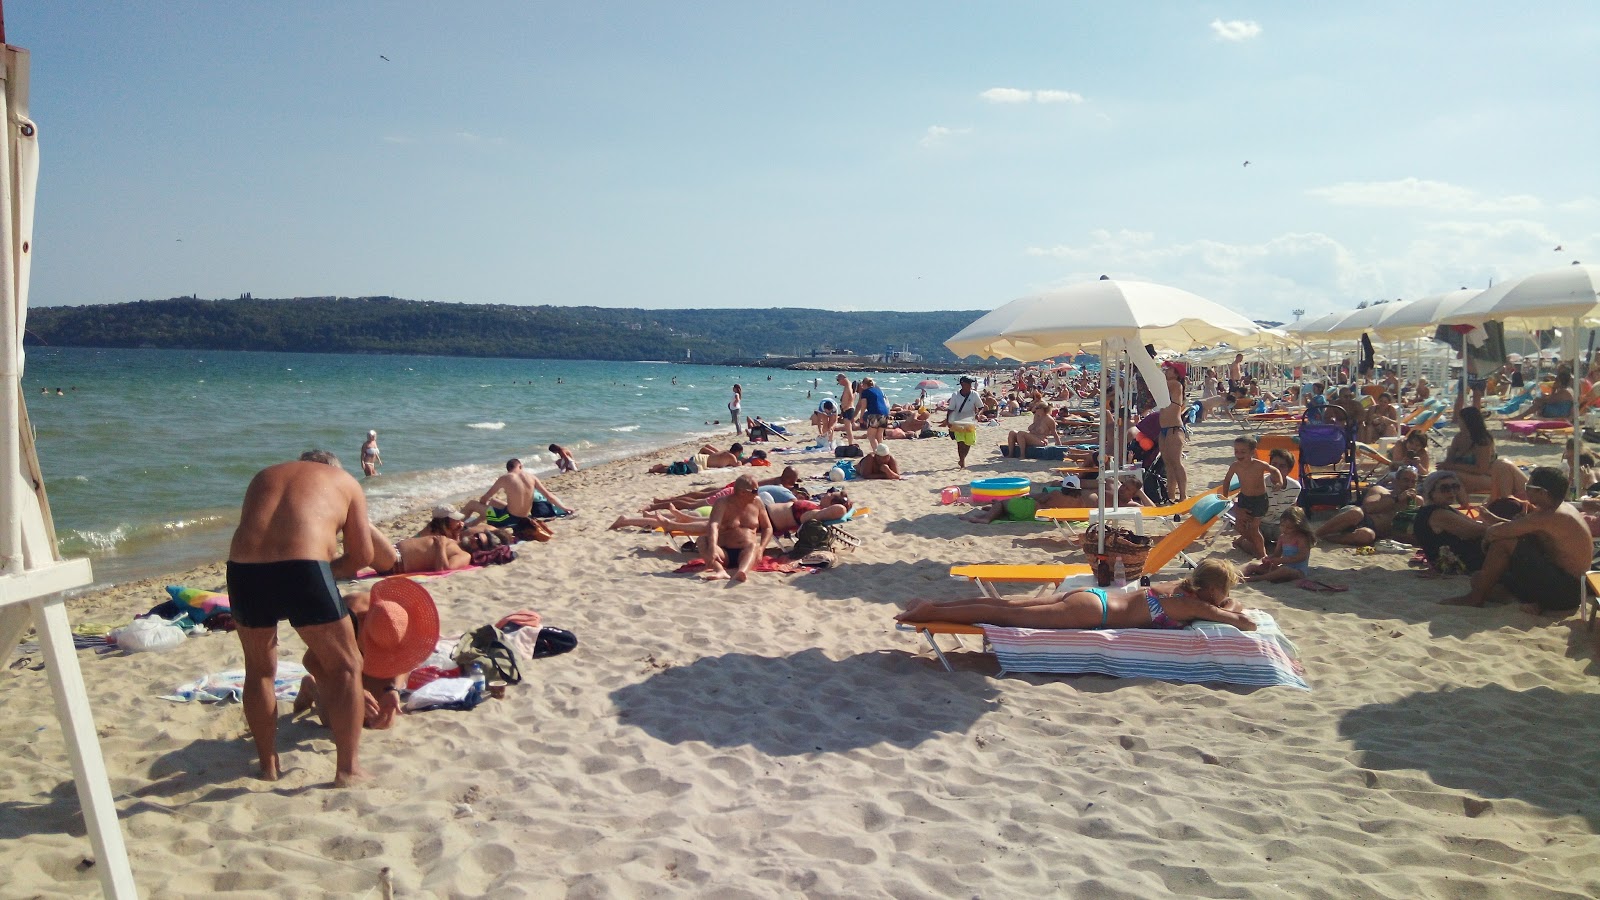 Zdjęcie Varna beach obszar kurortu nadmorskiego